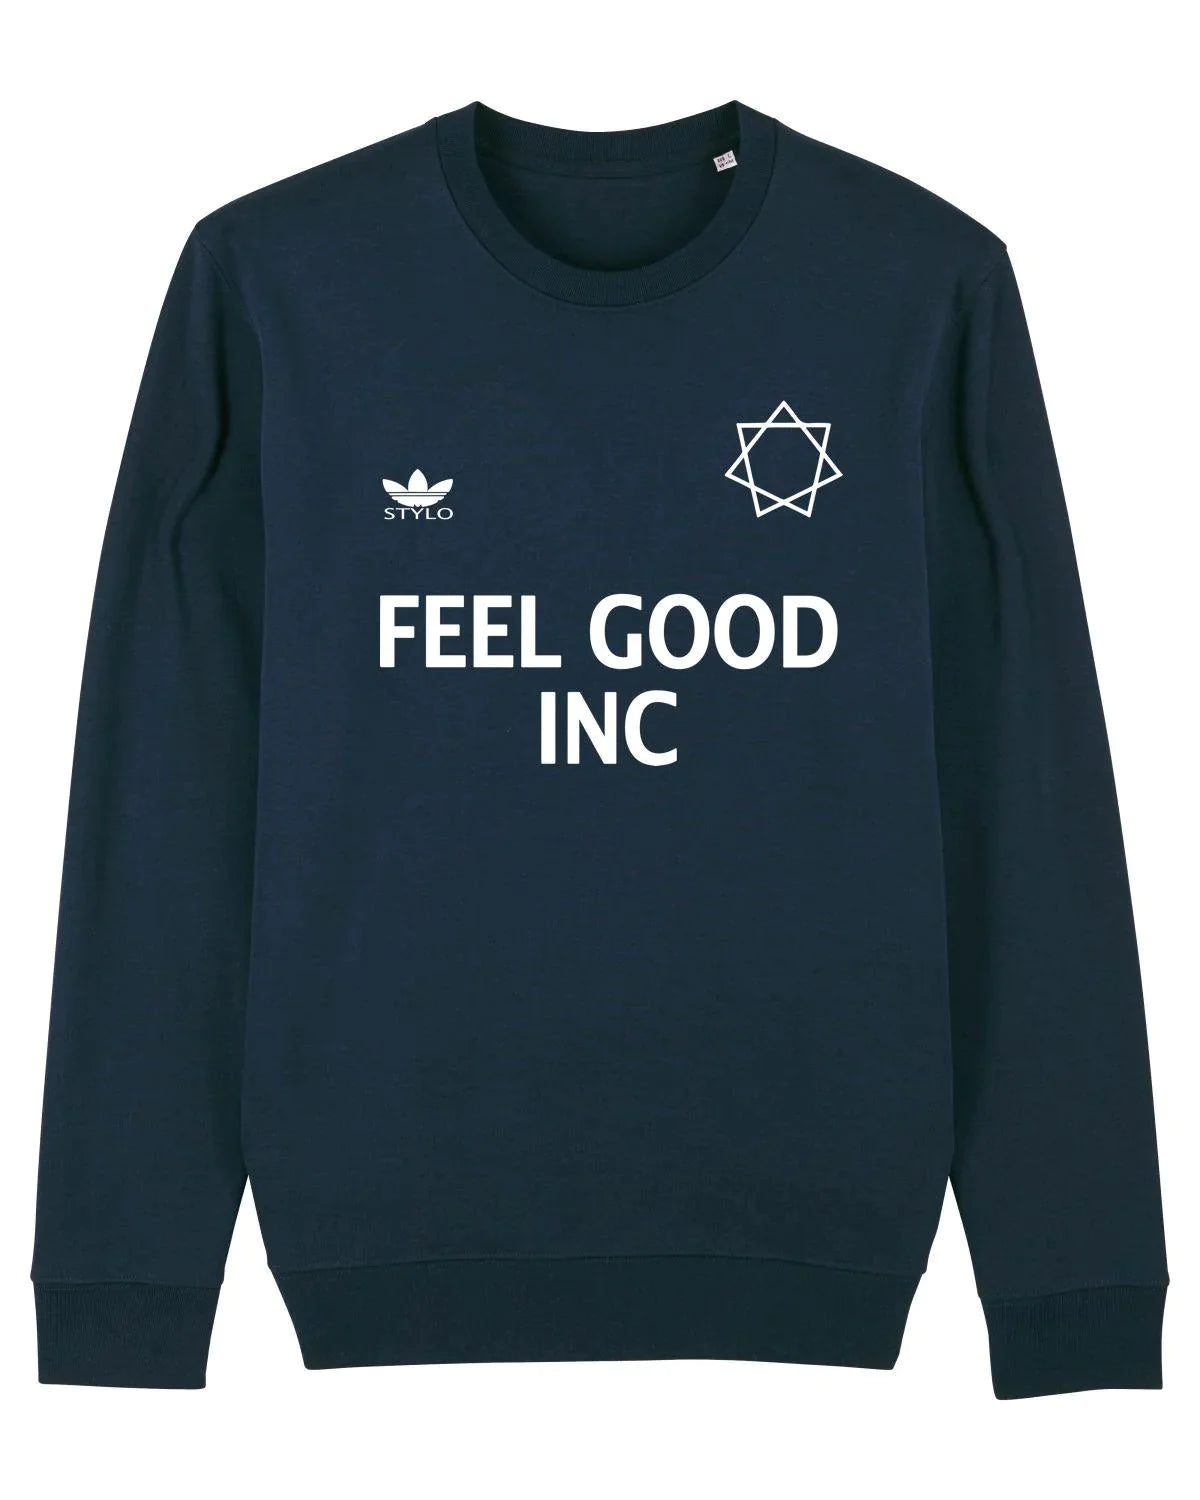 FEEL GOOD INC: Sweatshirt Inspired by Gorillaz, Damon Albarn & Football - SOUND IS COLOUR